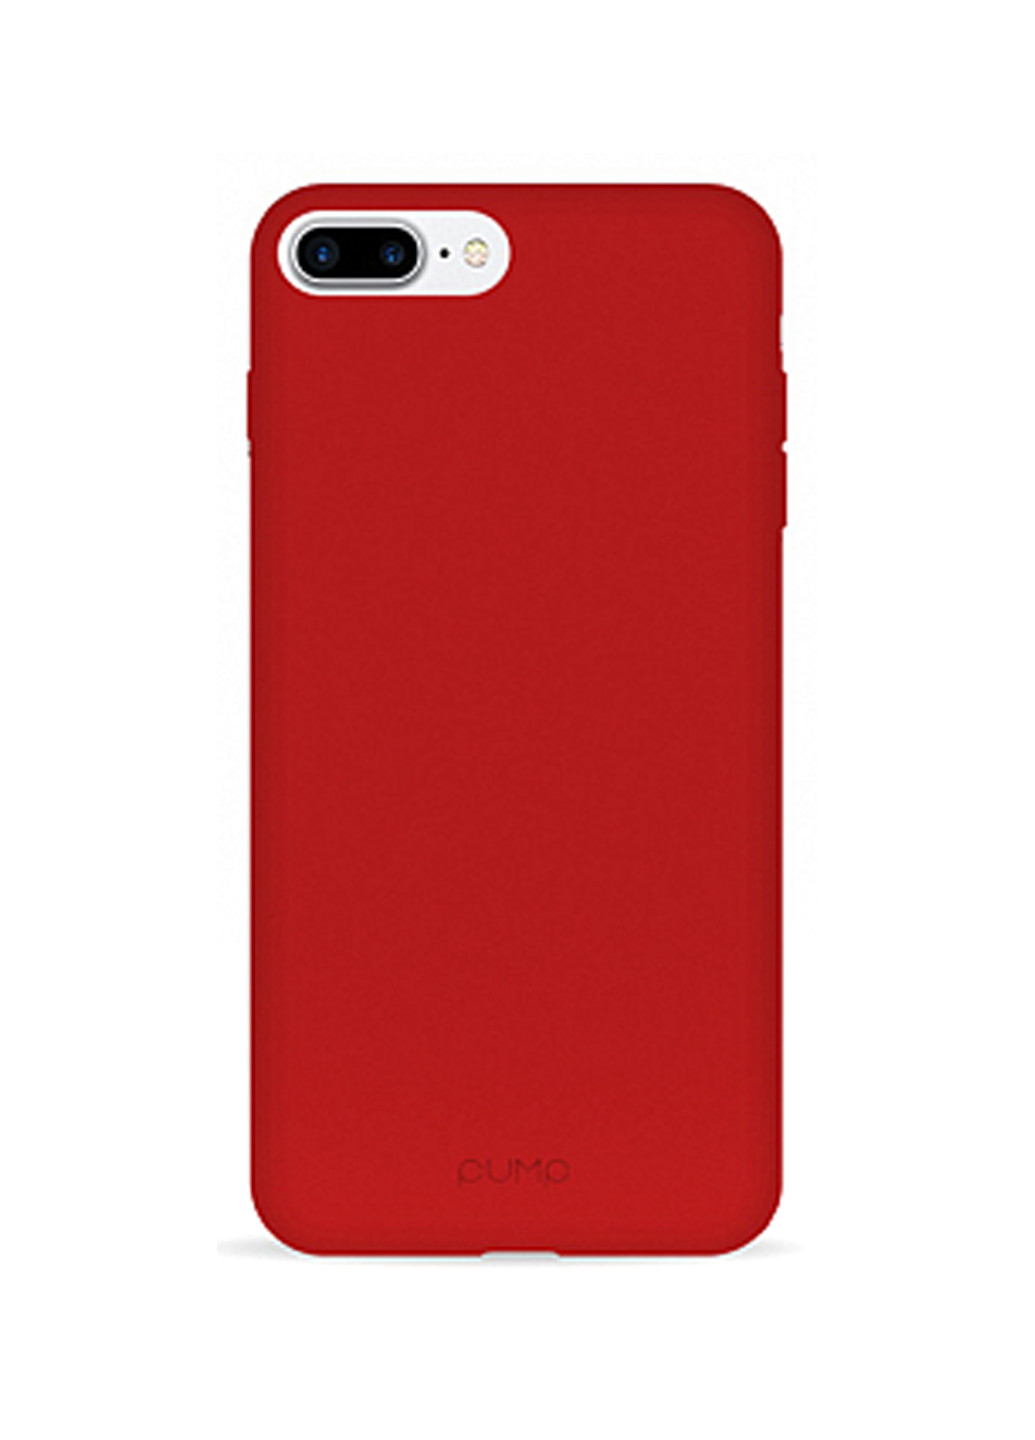 Чехол Silicone Case for iPhone 8 Plus/7 Plus Red Pump silicone case для iphone 8 plus/7 plus red (136993616)